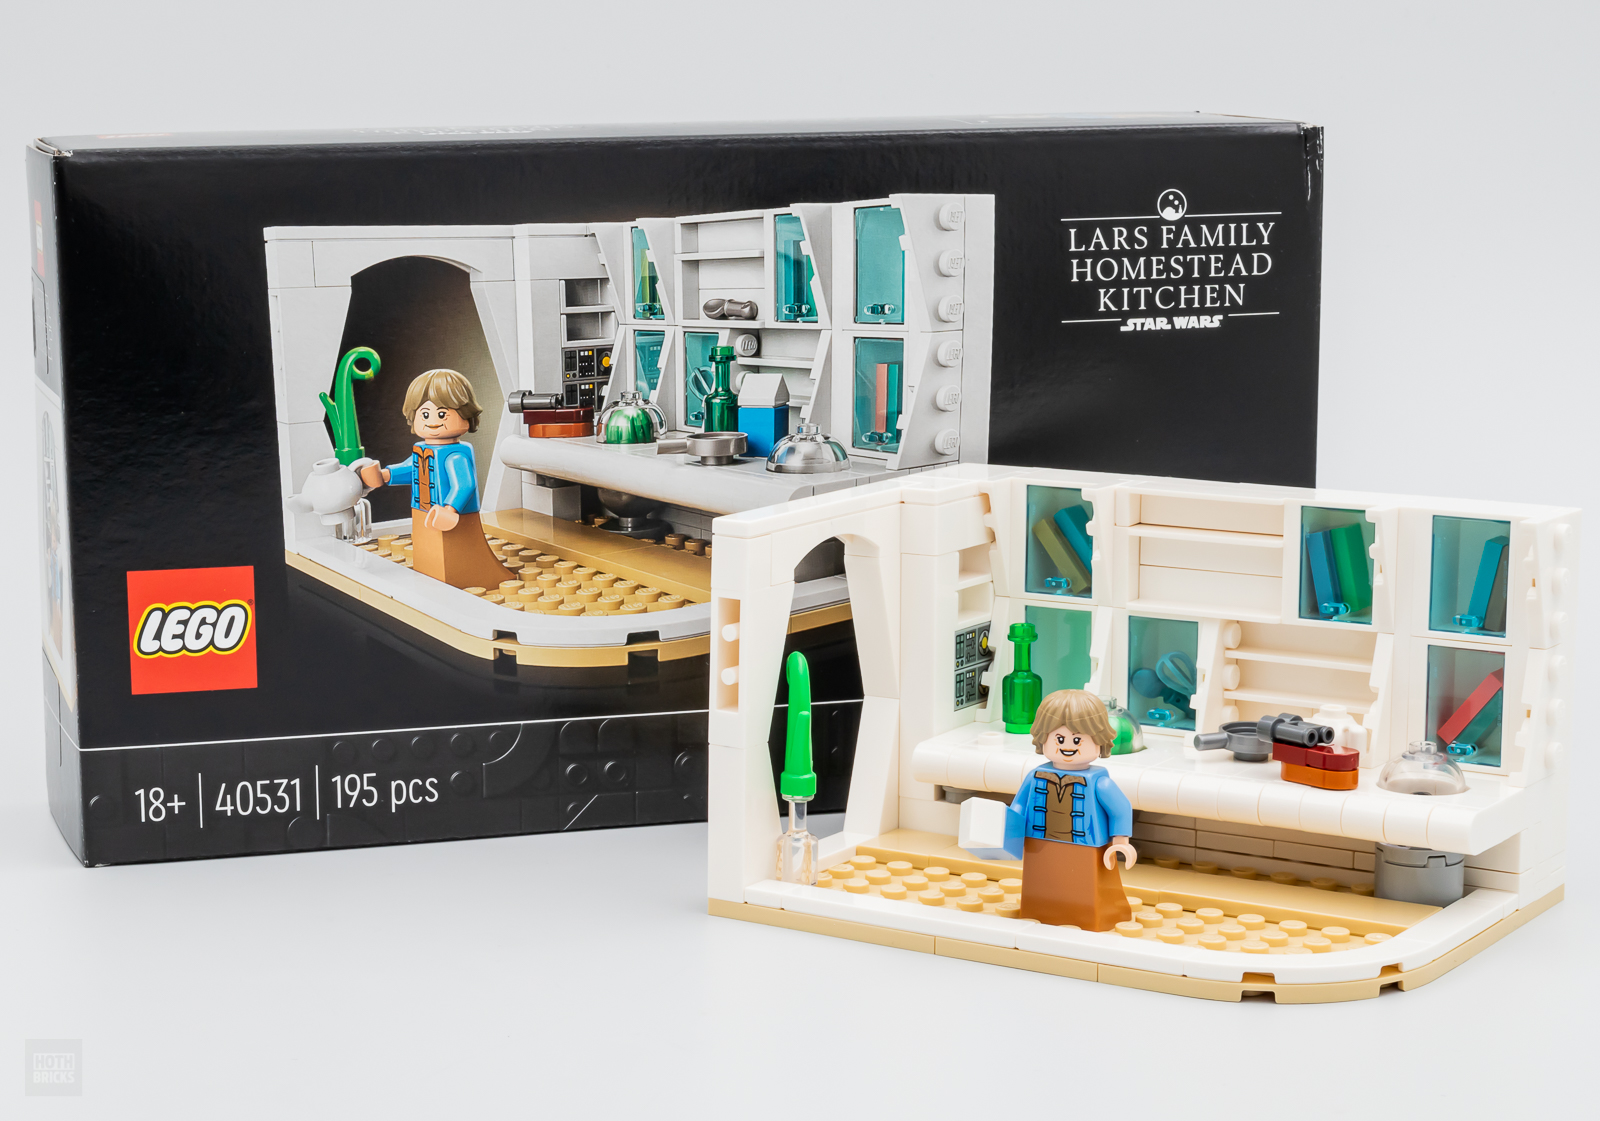 LEGO Star Wars Lars Family Homestead Kitchen NISB